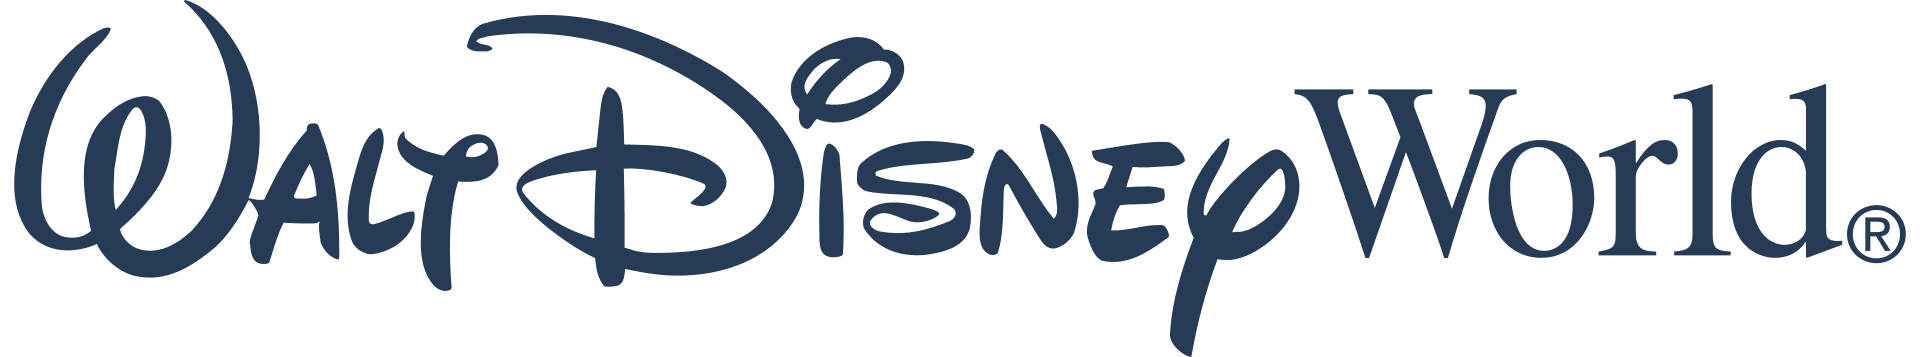 Walt Disney World Logo 2018 - File:Walt Disney World Logo 2018.svg - Wikipedia